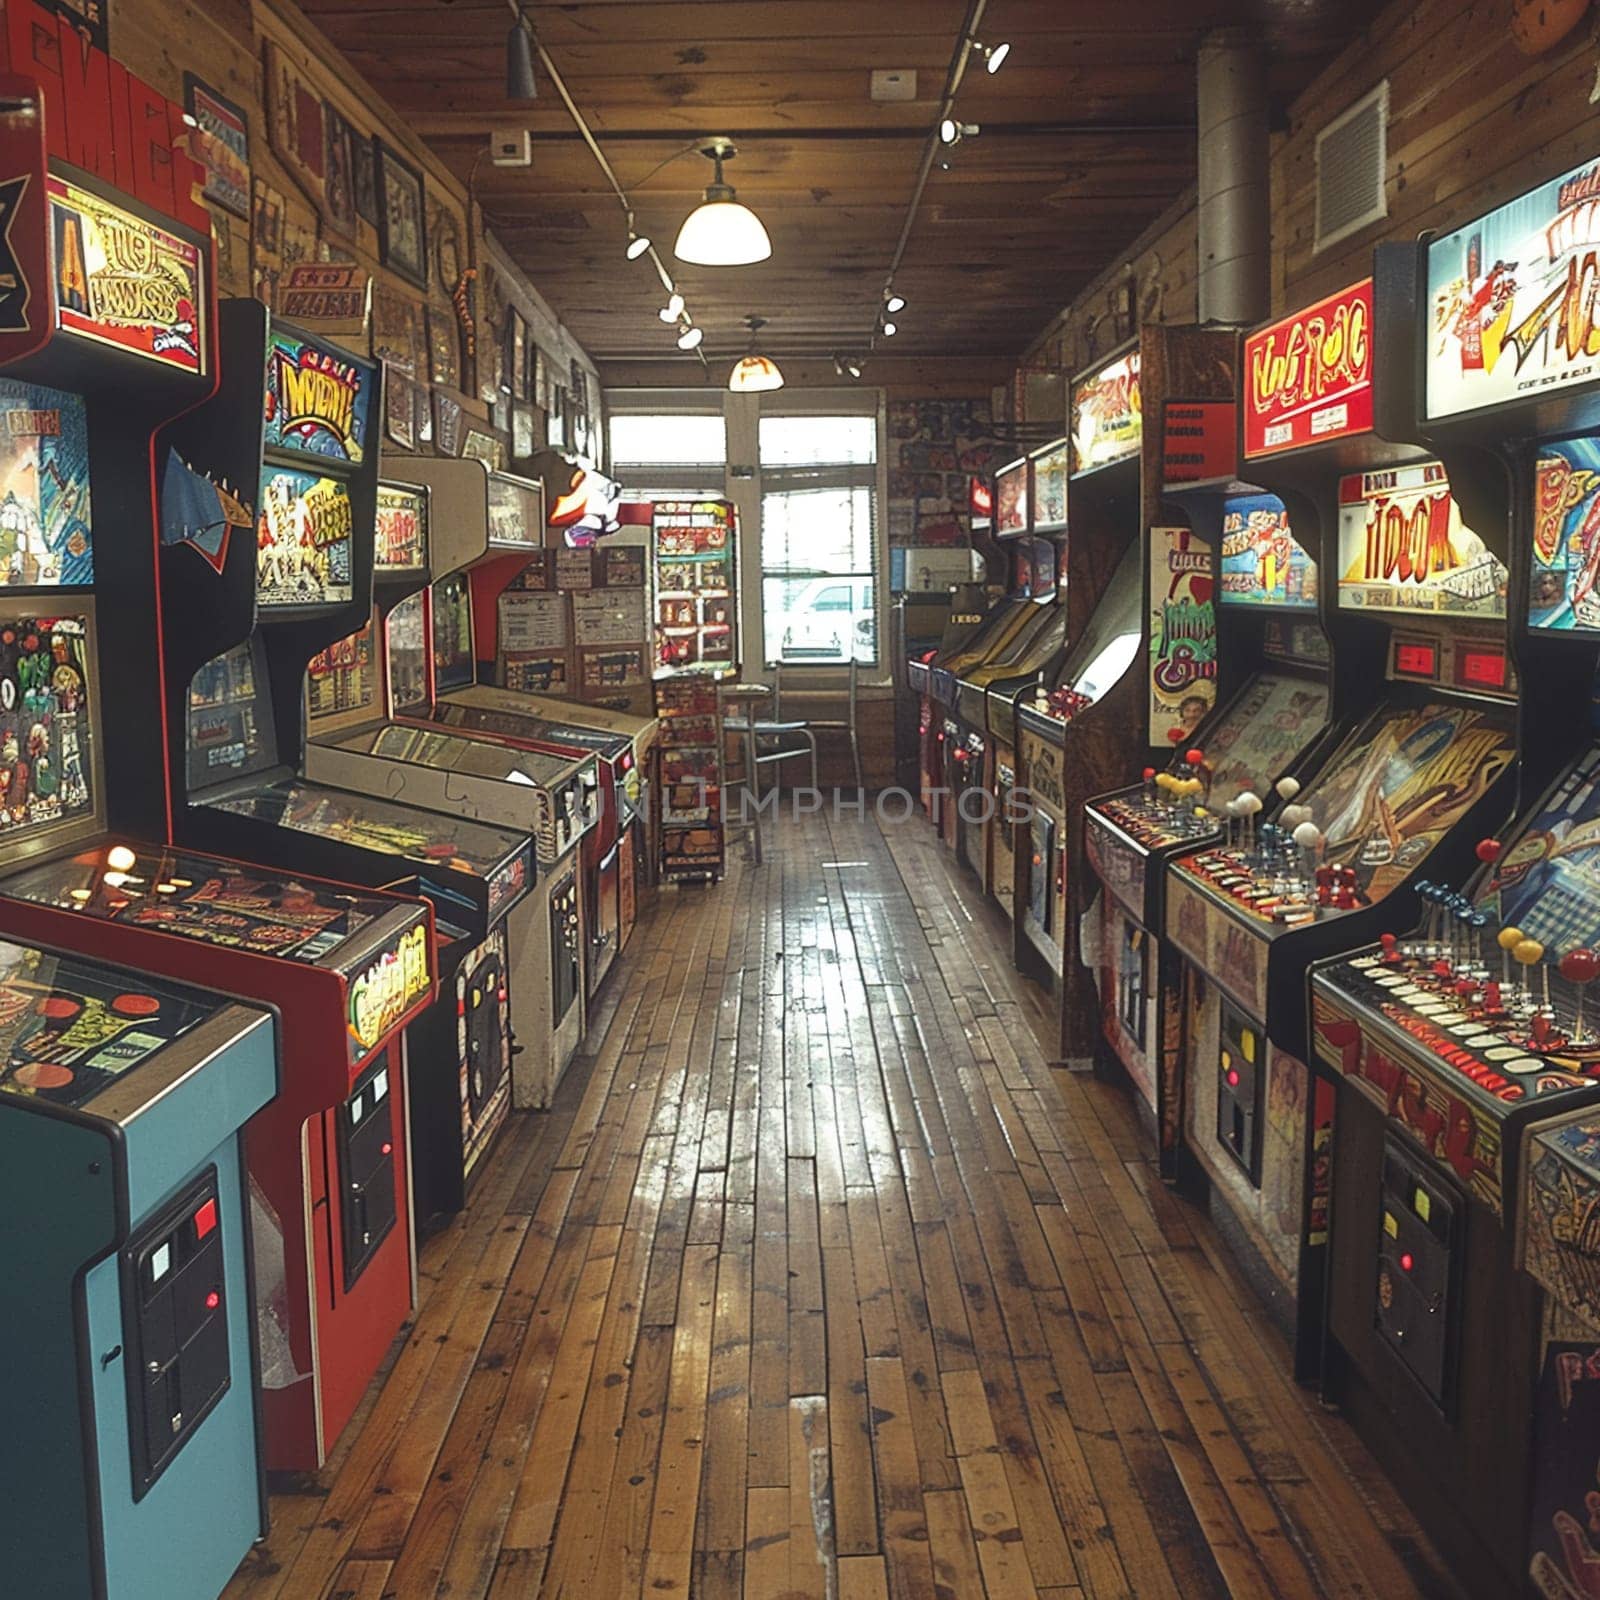 Nostalgic Arcade Room Rekindles Classic Fun in Business of Retro Gaming, Arcade tokens and classic joysticks rekindle a story of classic fun and retro gaming in the nostalgic arcade room business.